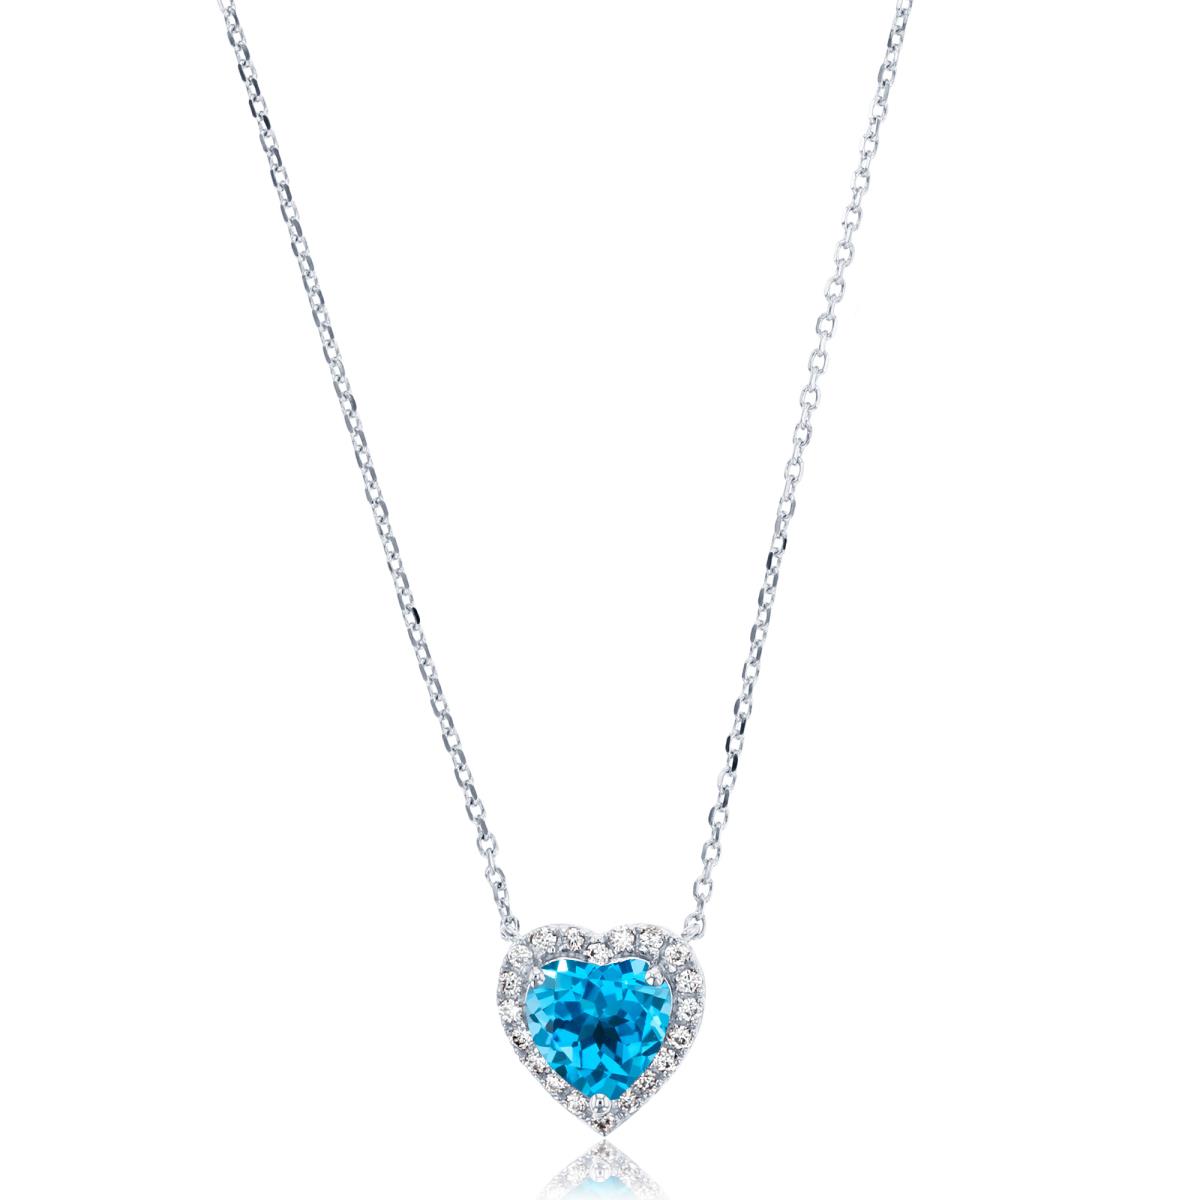 14K White Gold 0.10cttw Rnd Diamonds & 6mm Heart Cut Blue Topaz 18" Necklace